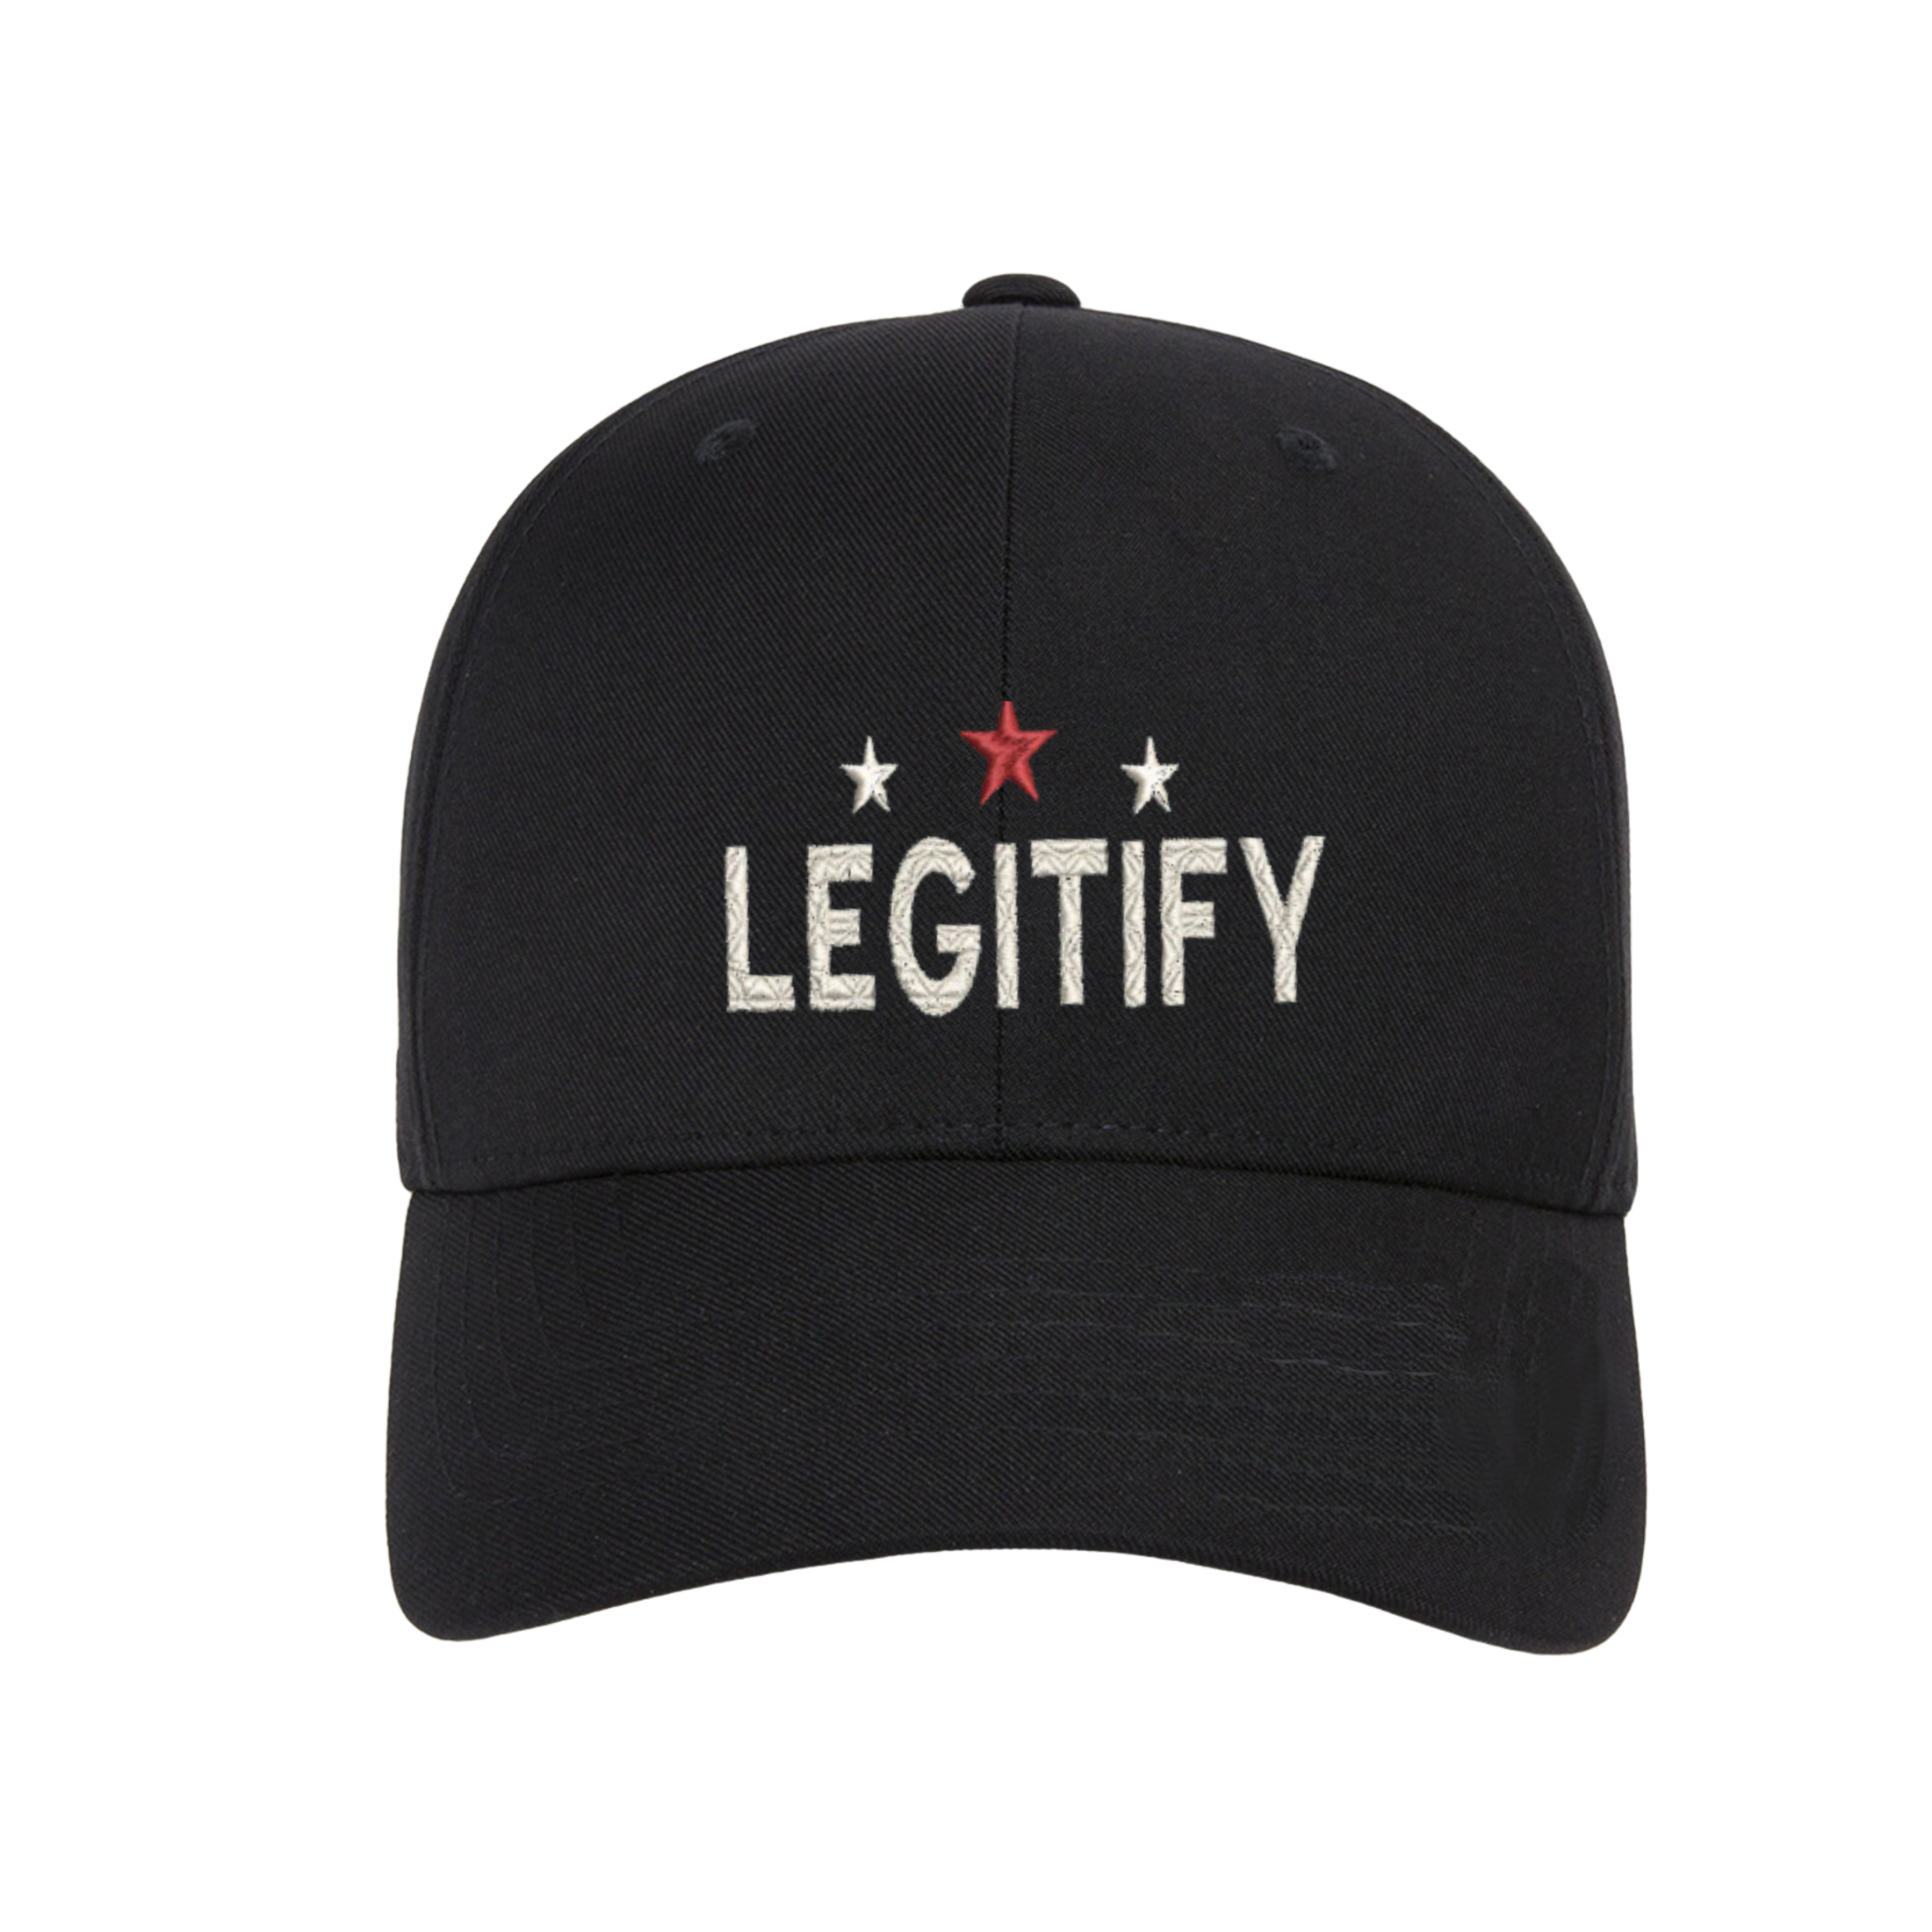 Legitify Unisex Velocity Perfomance Hat